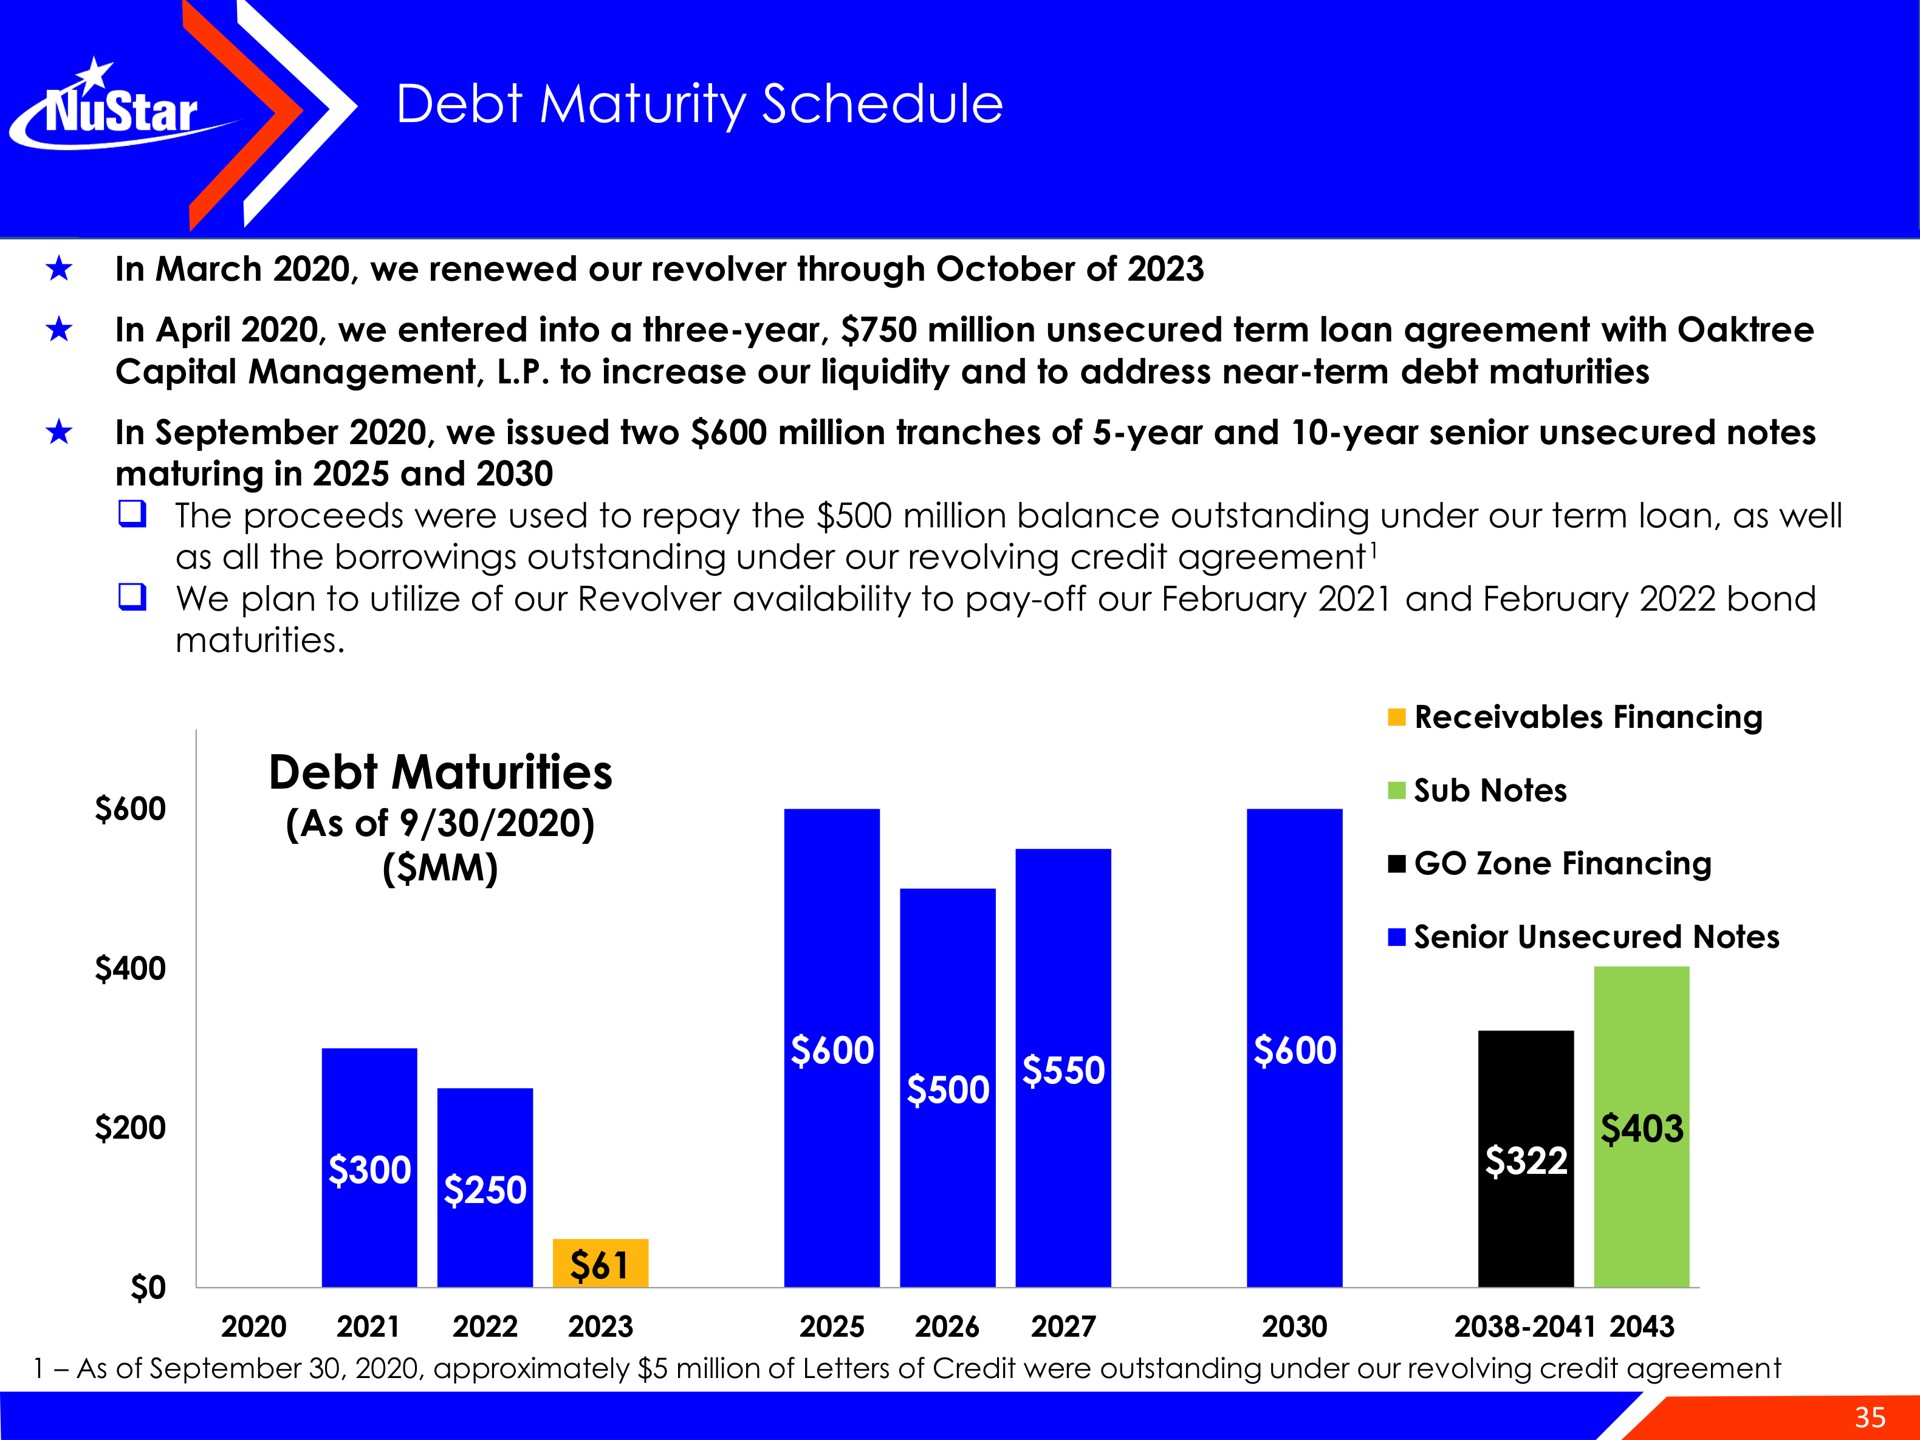 debt maturity schedule debt maturities sub notes | NuStar Energy